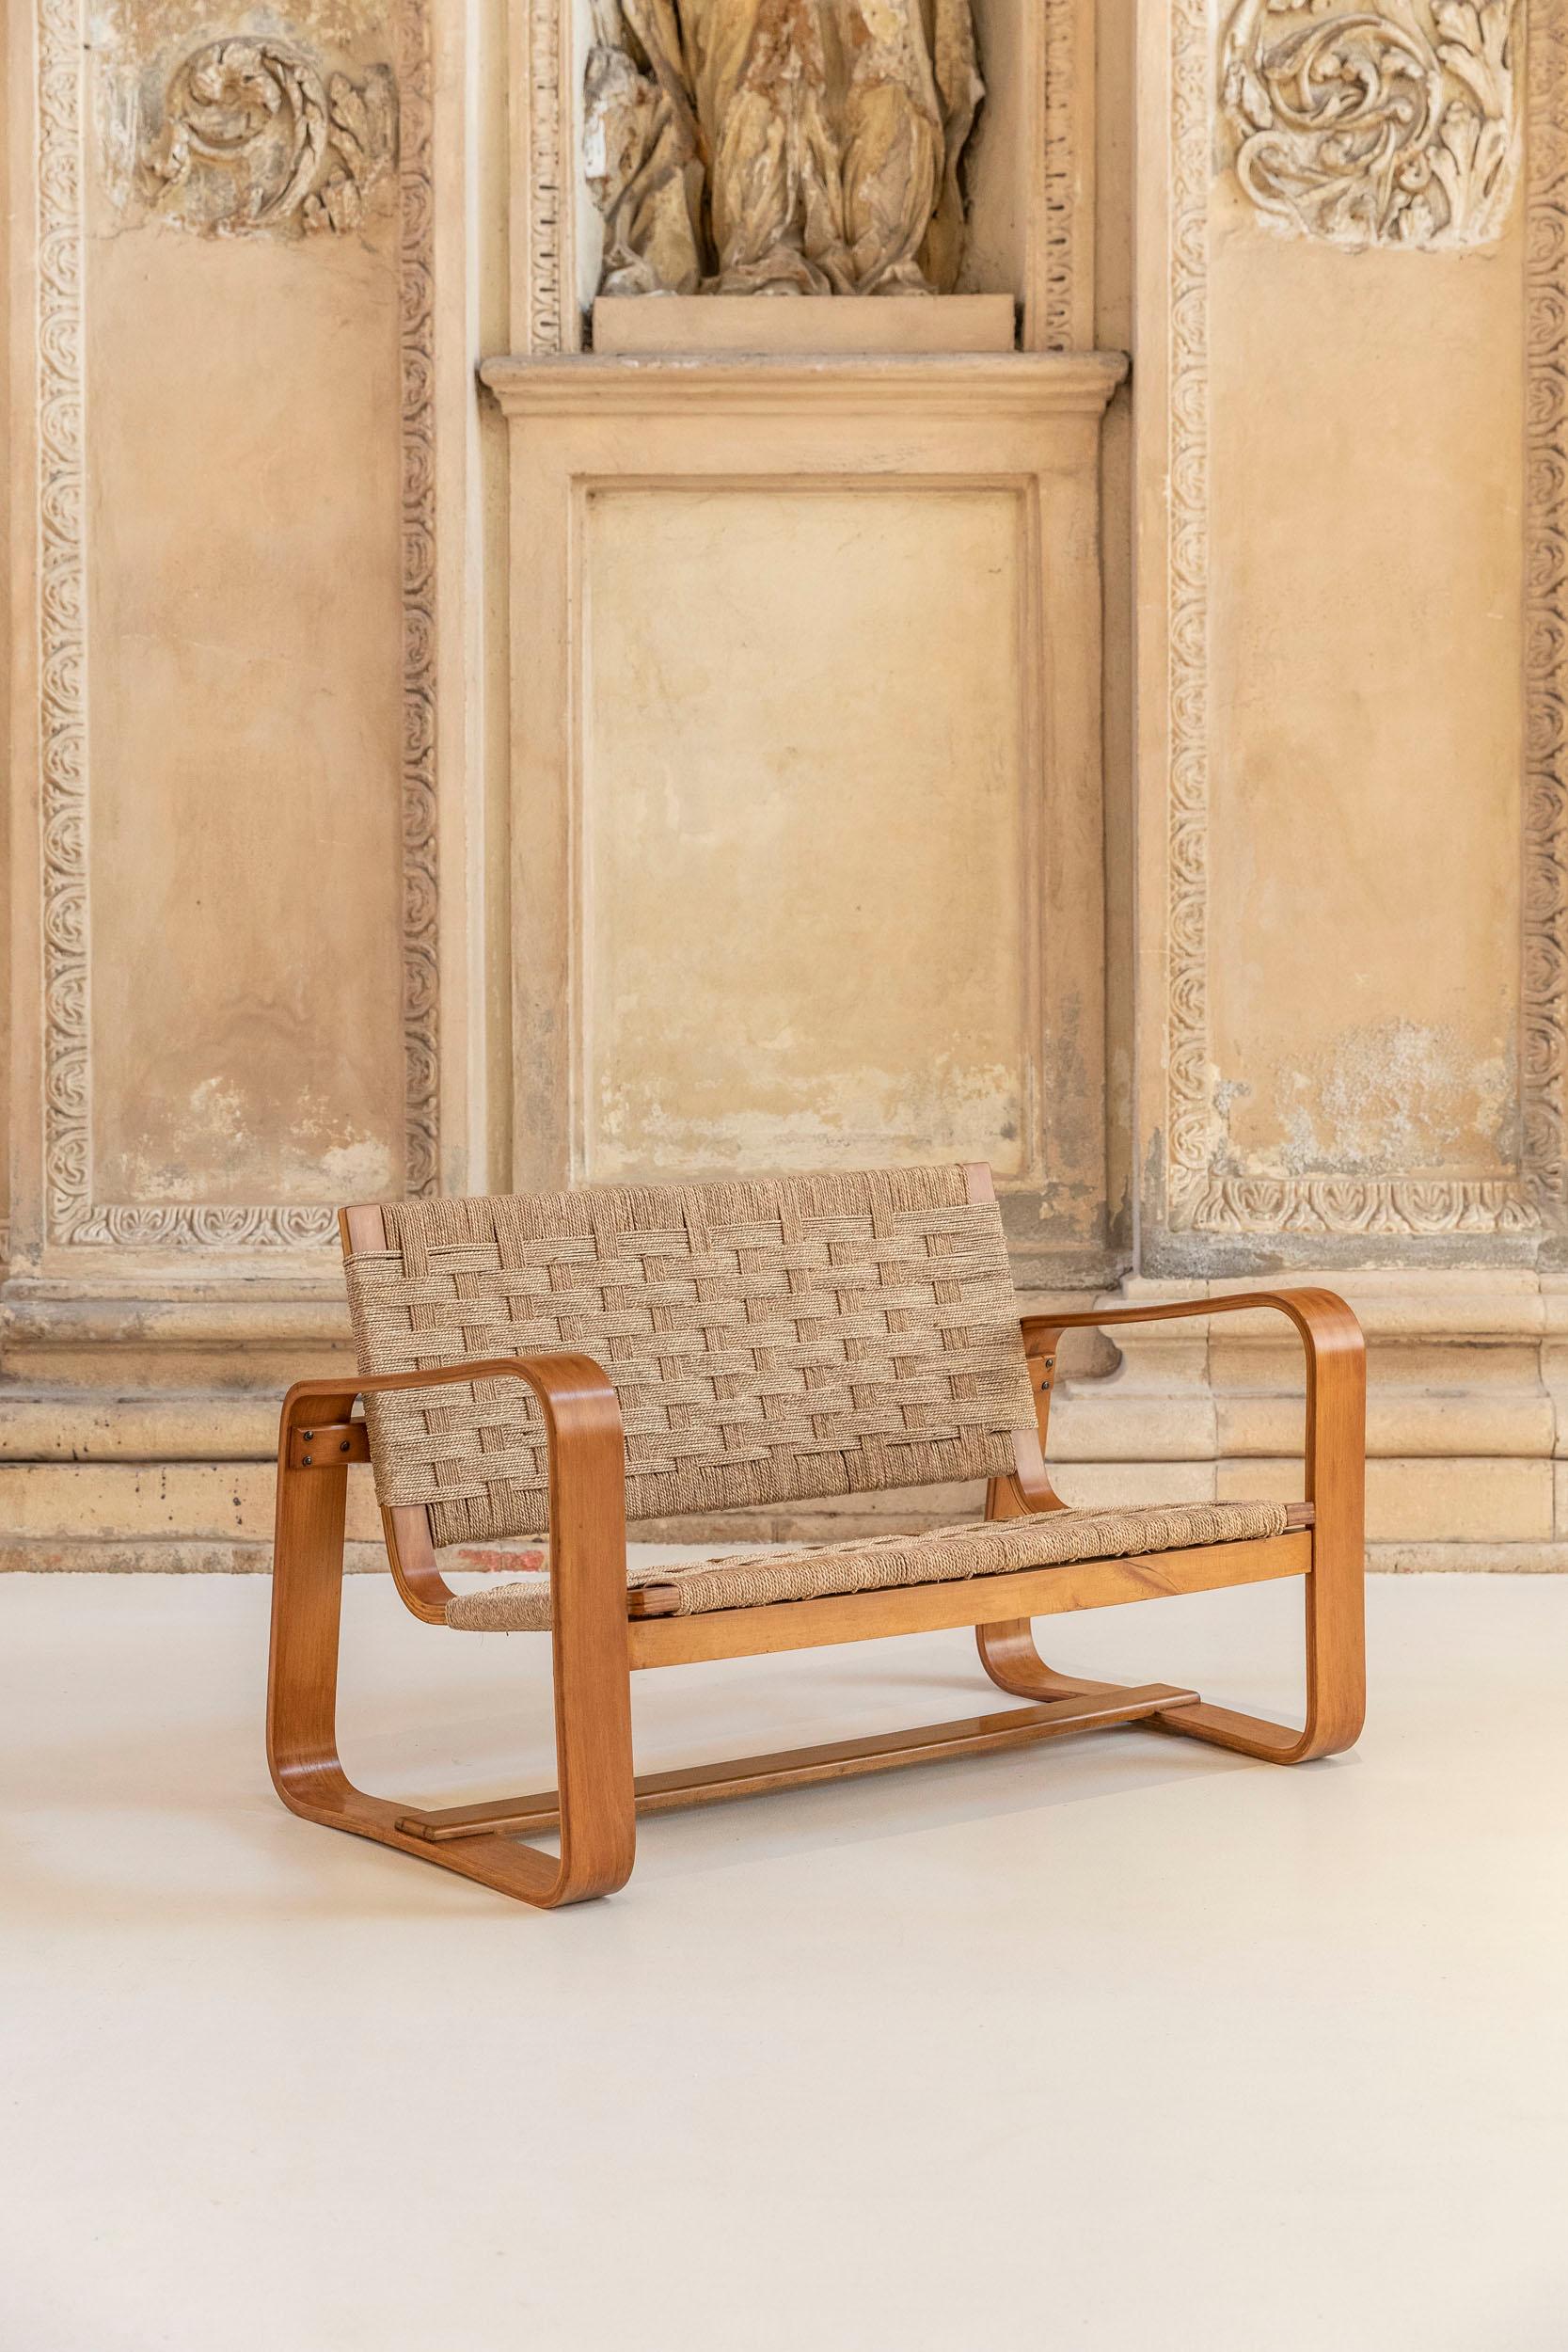 Mid-Century Modern Giuseppe Pagano Pogatschnig Sofa